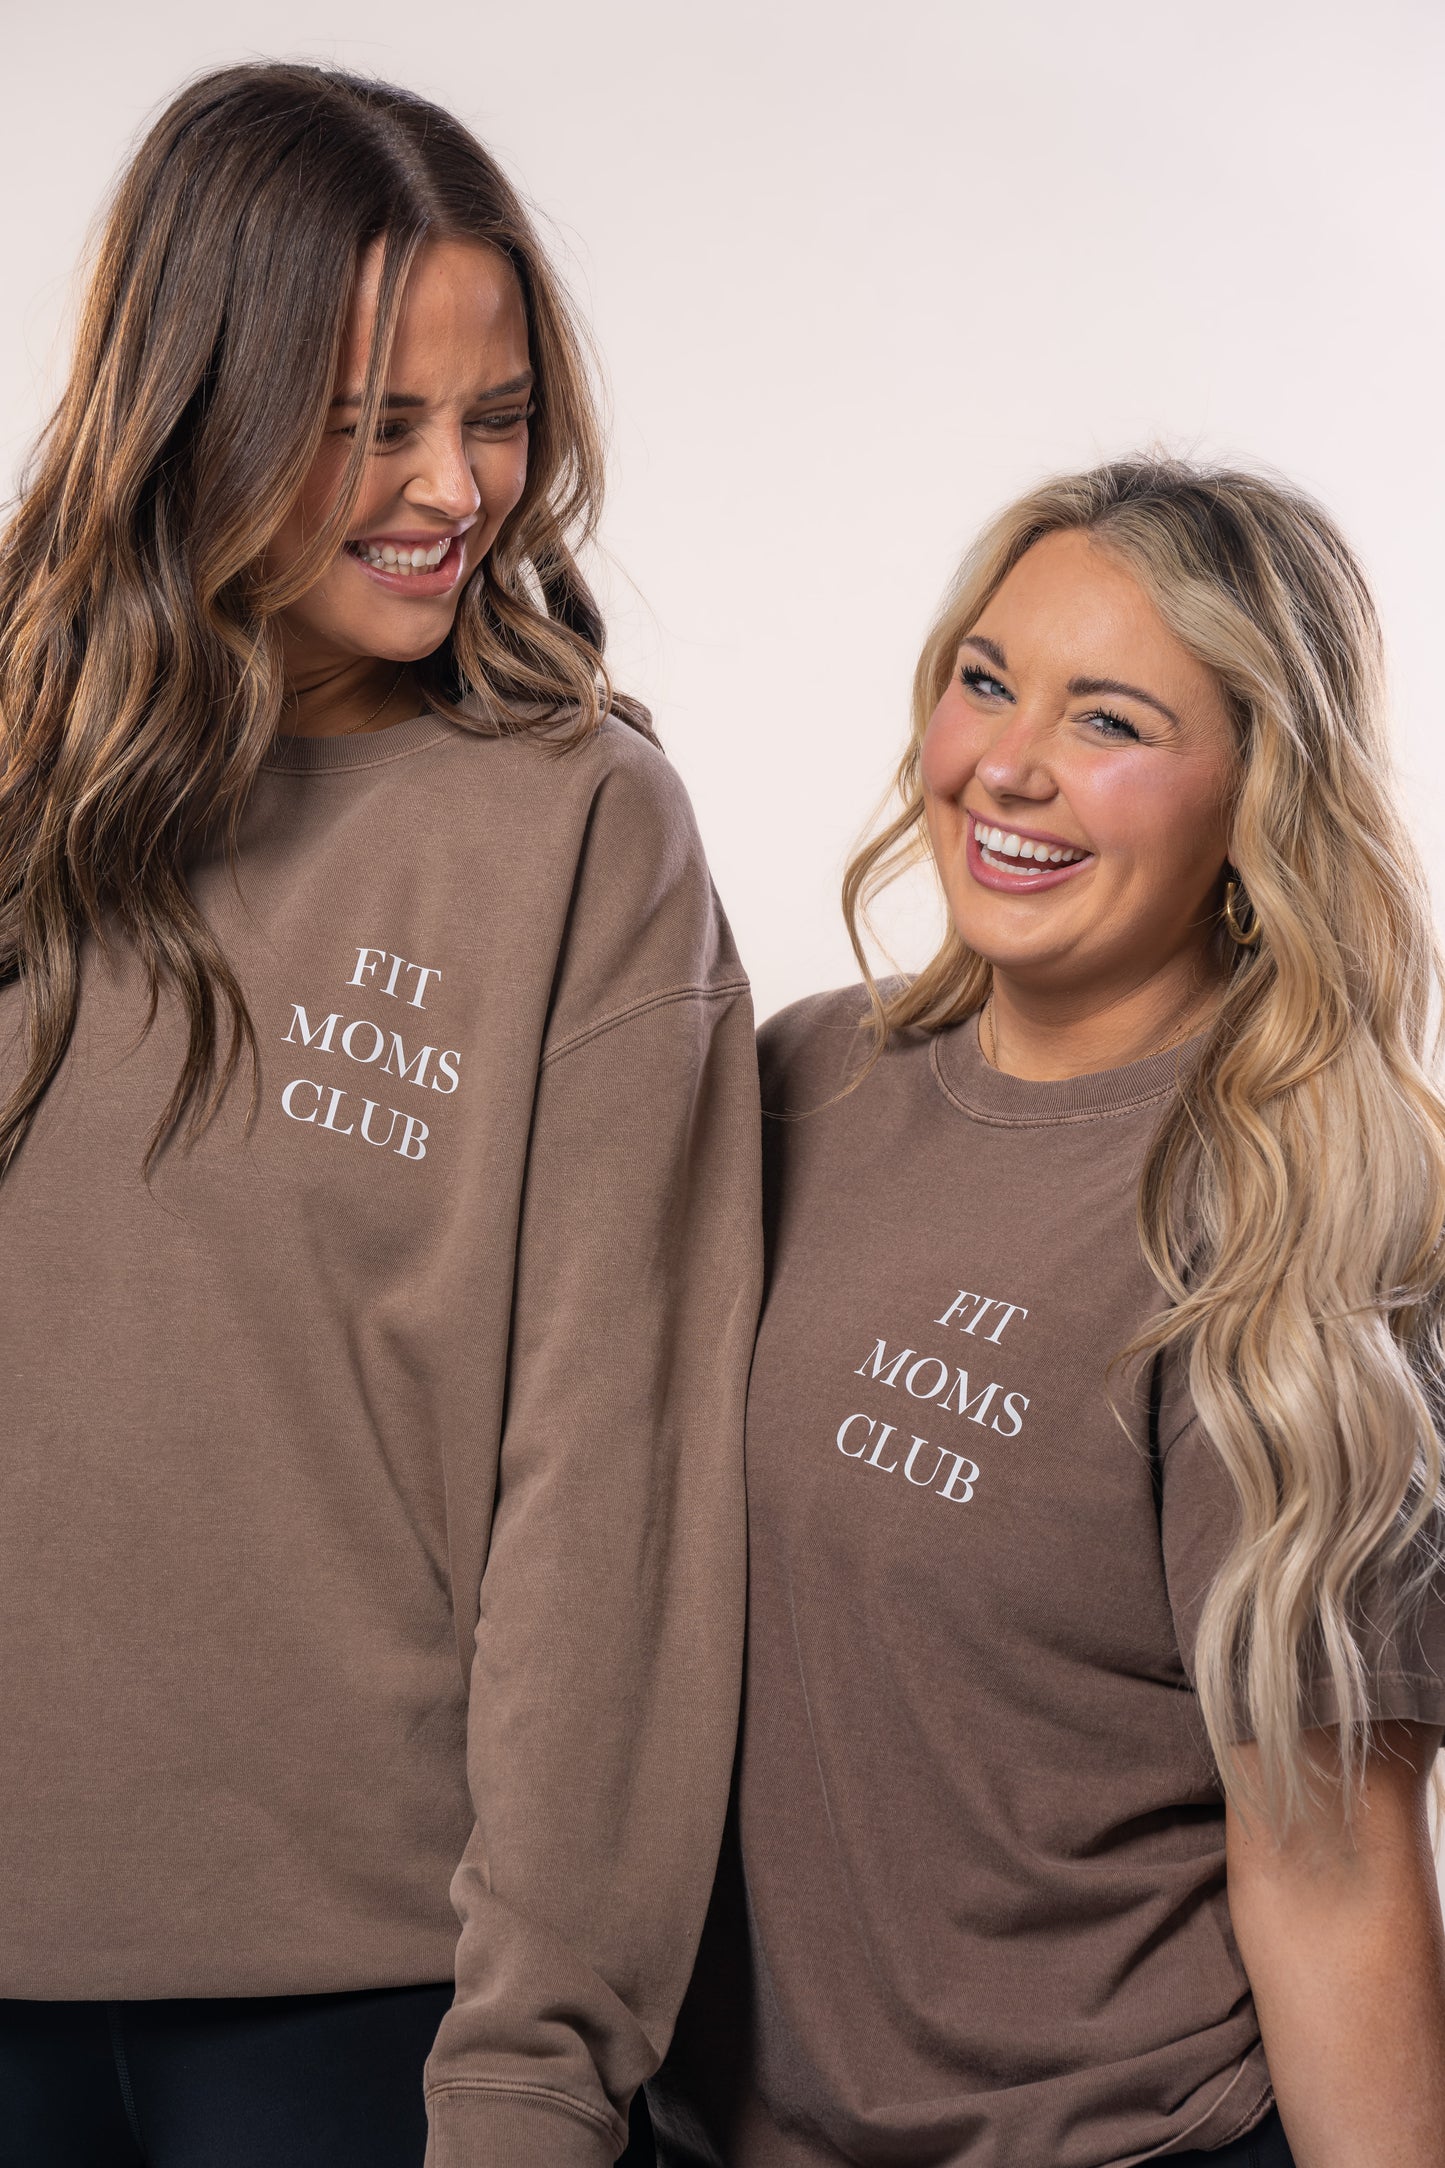 Fit Moms Club - Sweatshirt (Cocoa)